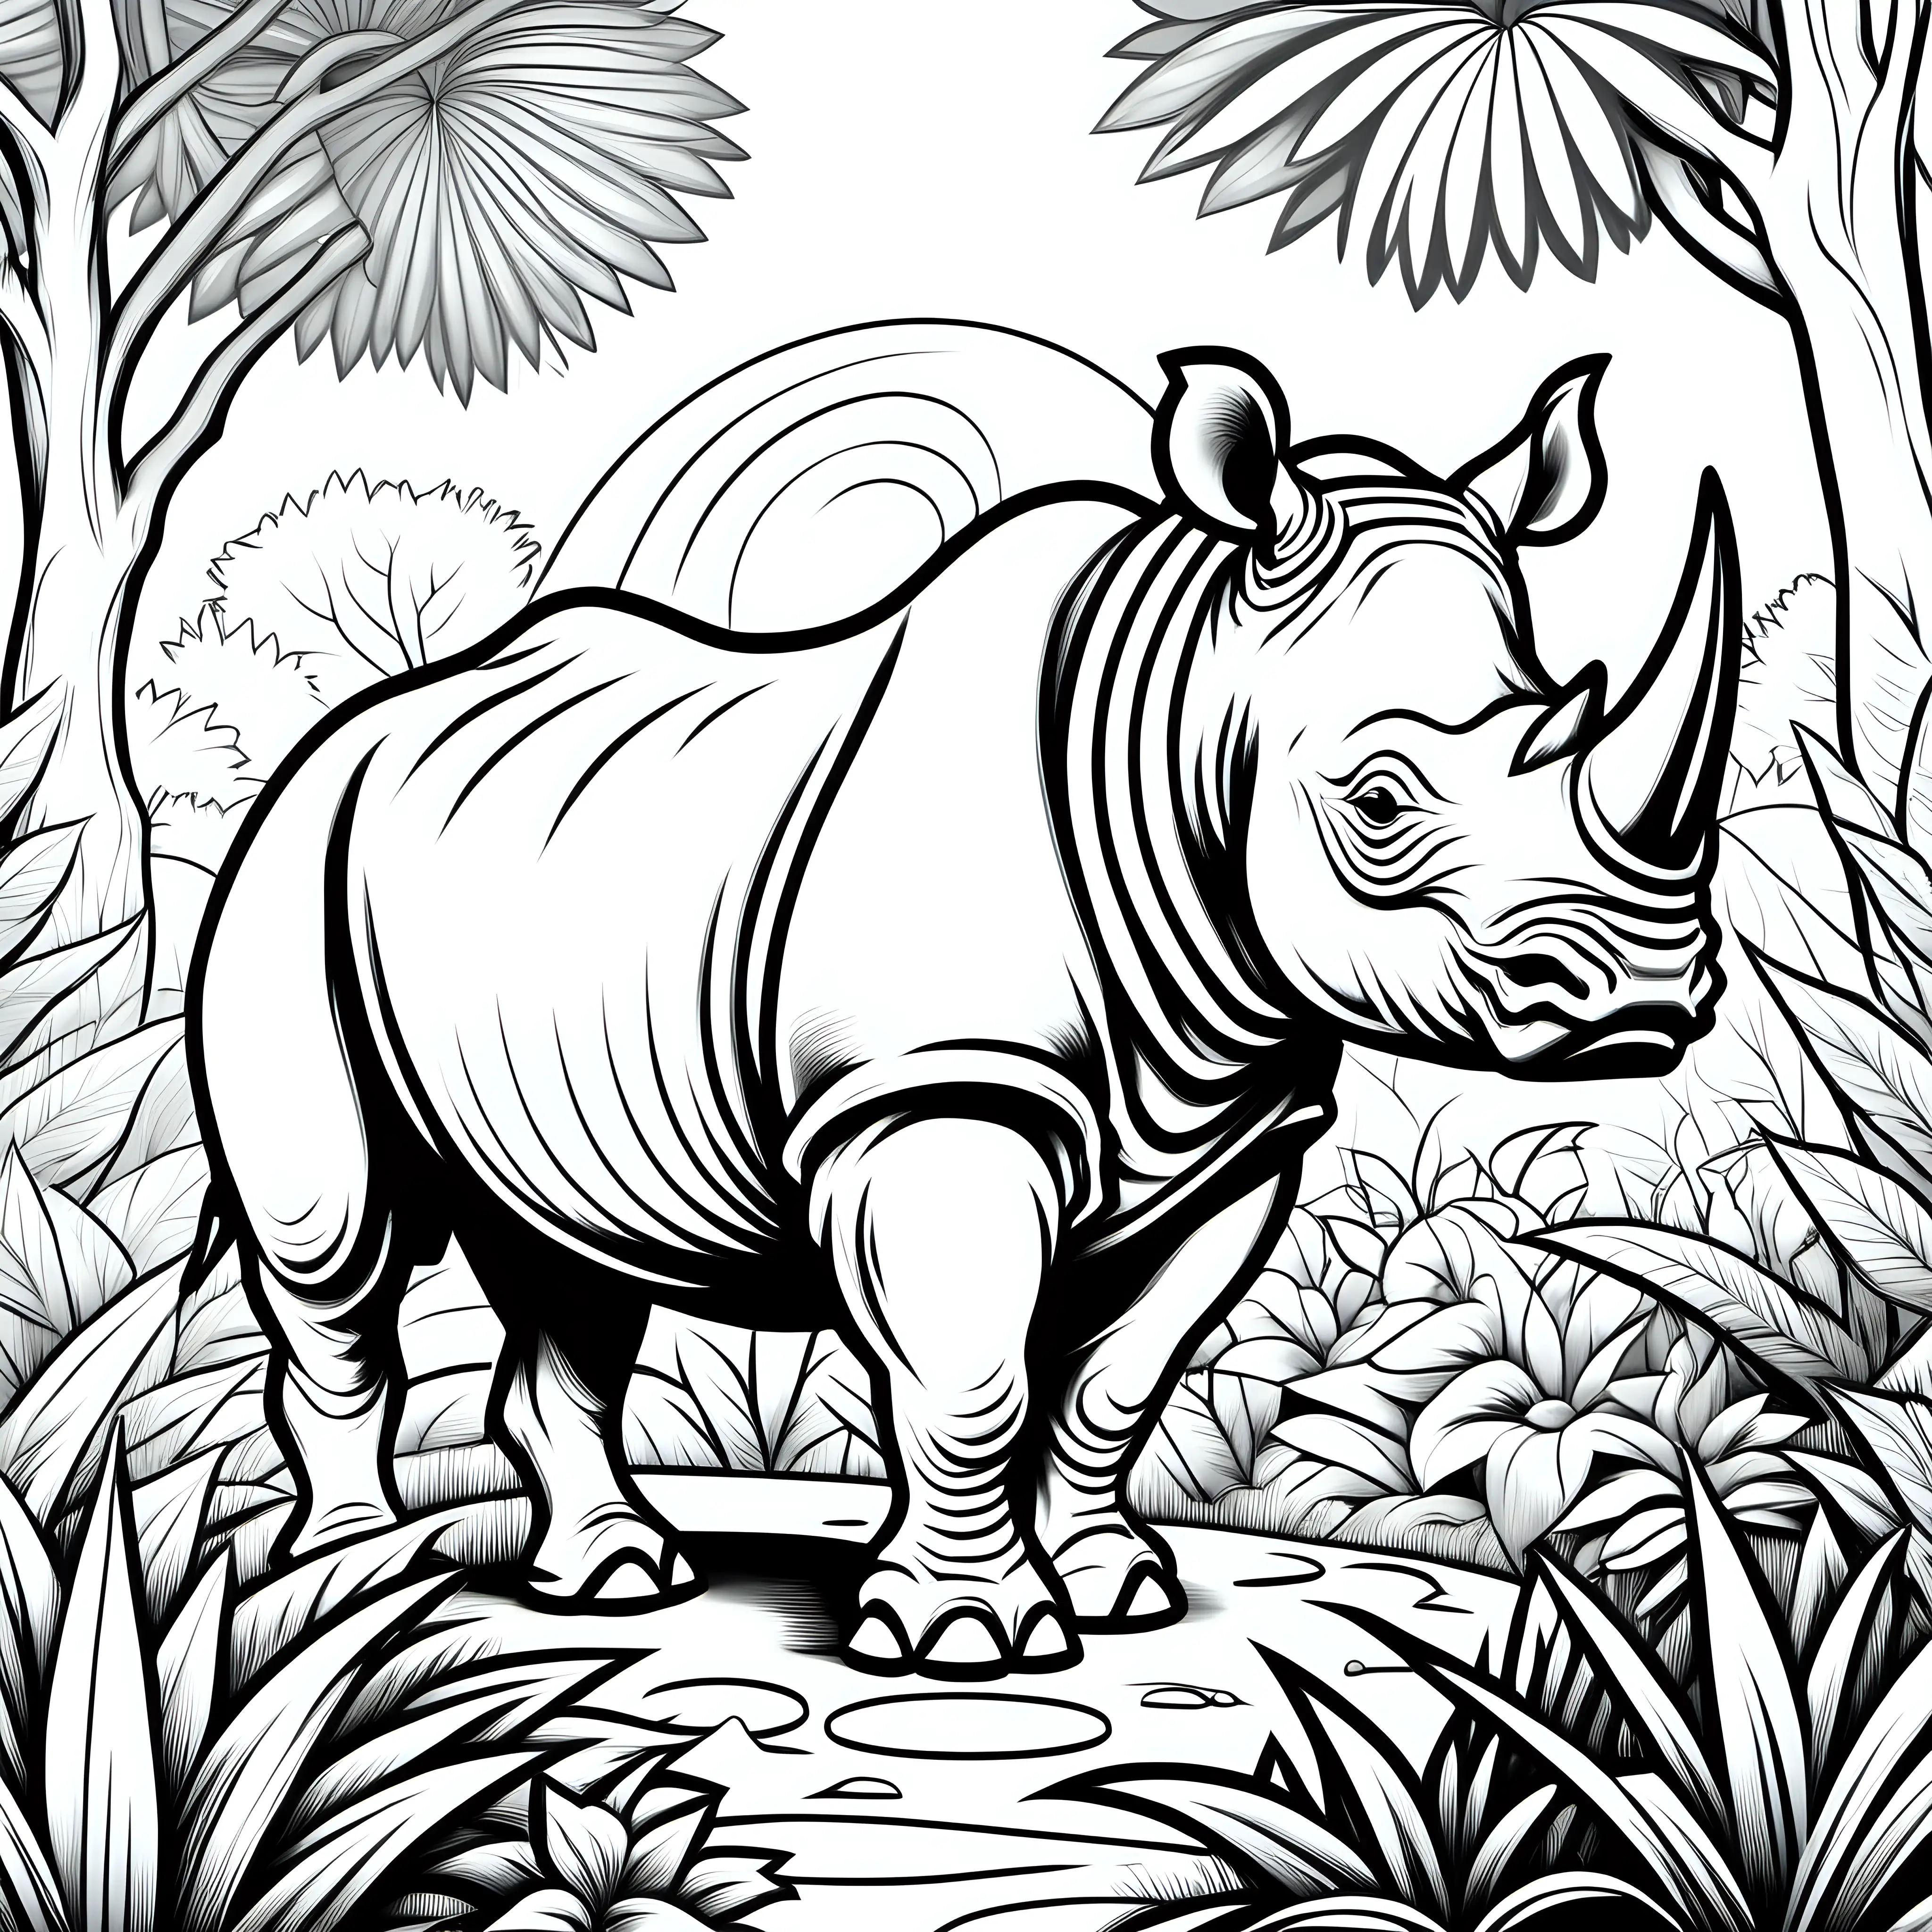 Coloring page for kids, Rhinoceros in Garden of Eden, clean line art